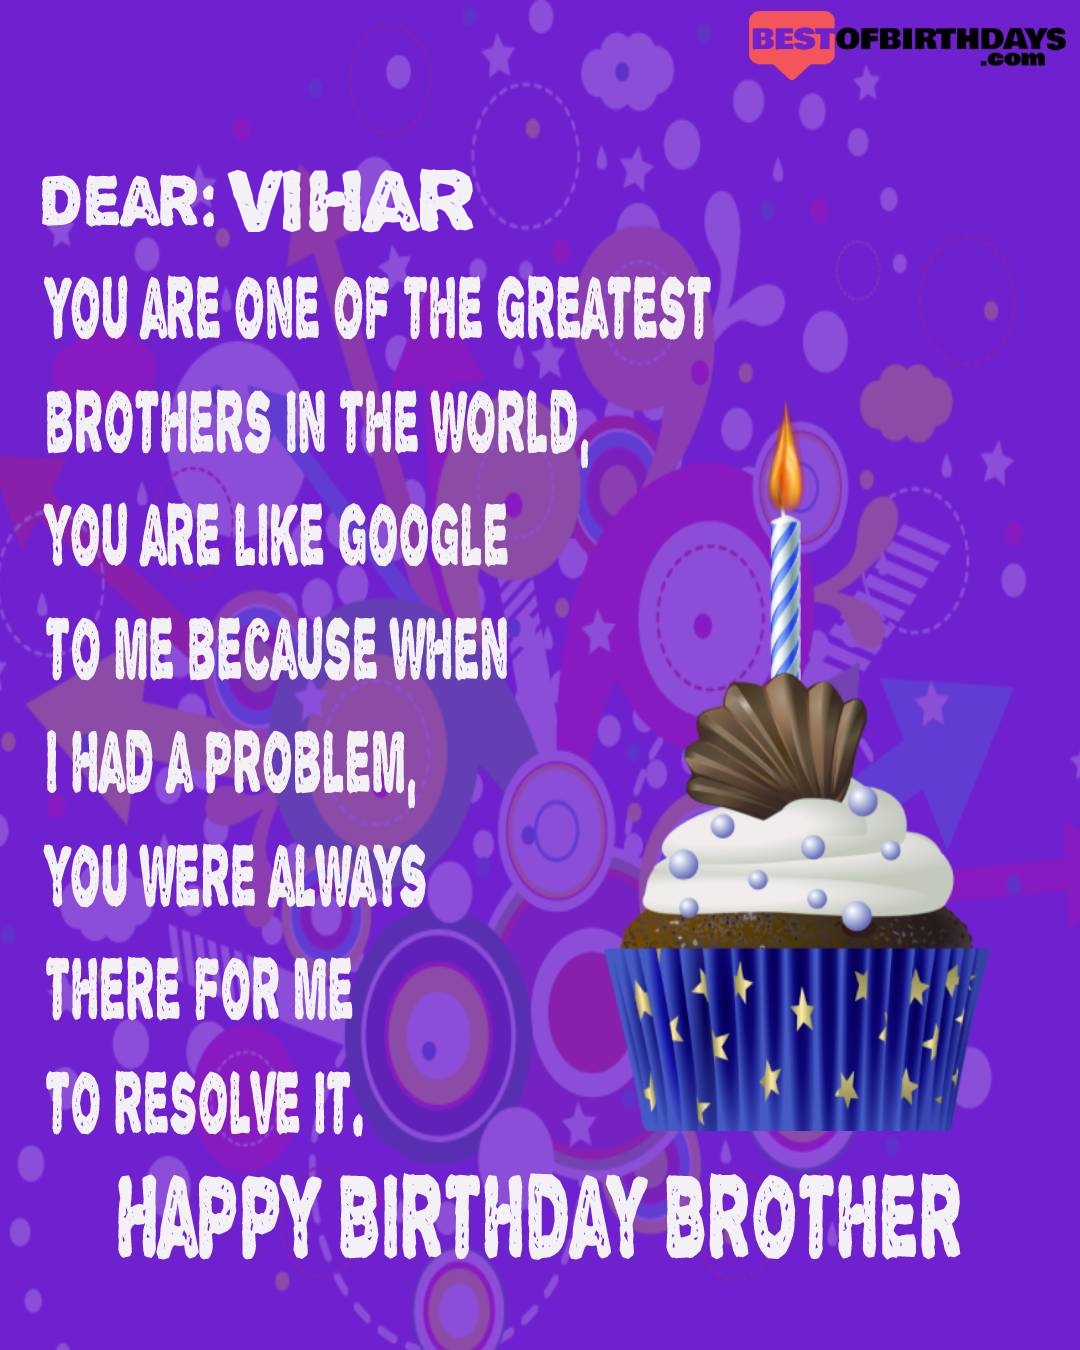 Happy birthday vihar bhai brother bro